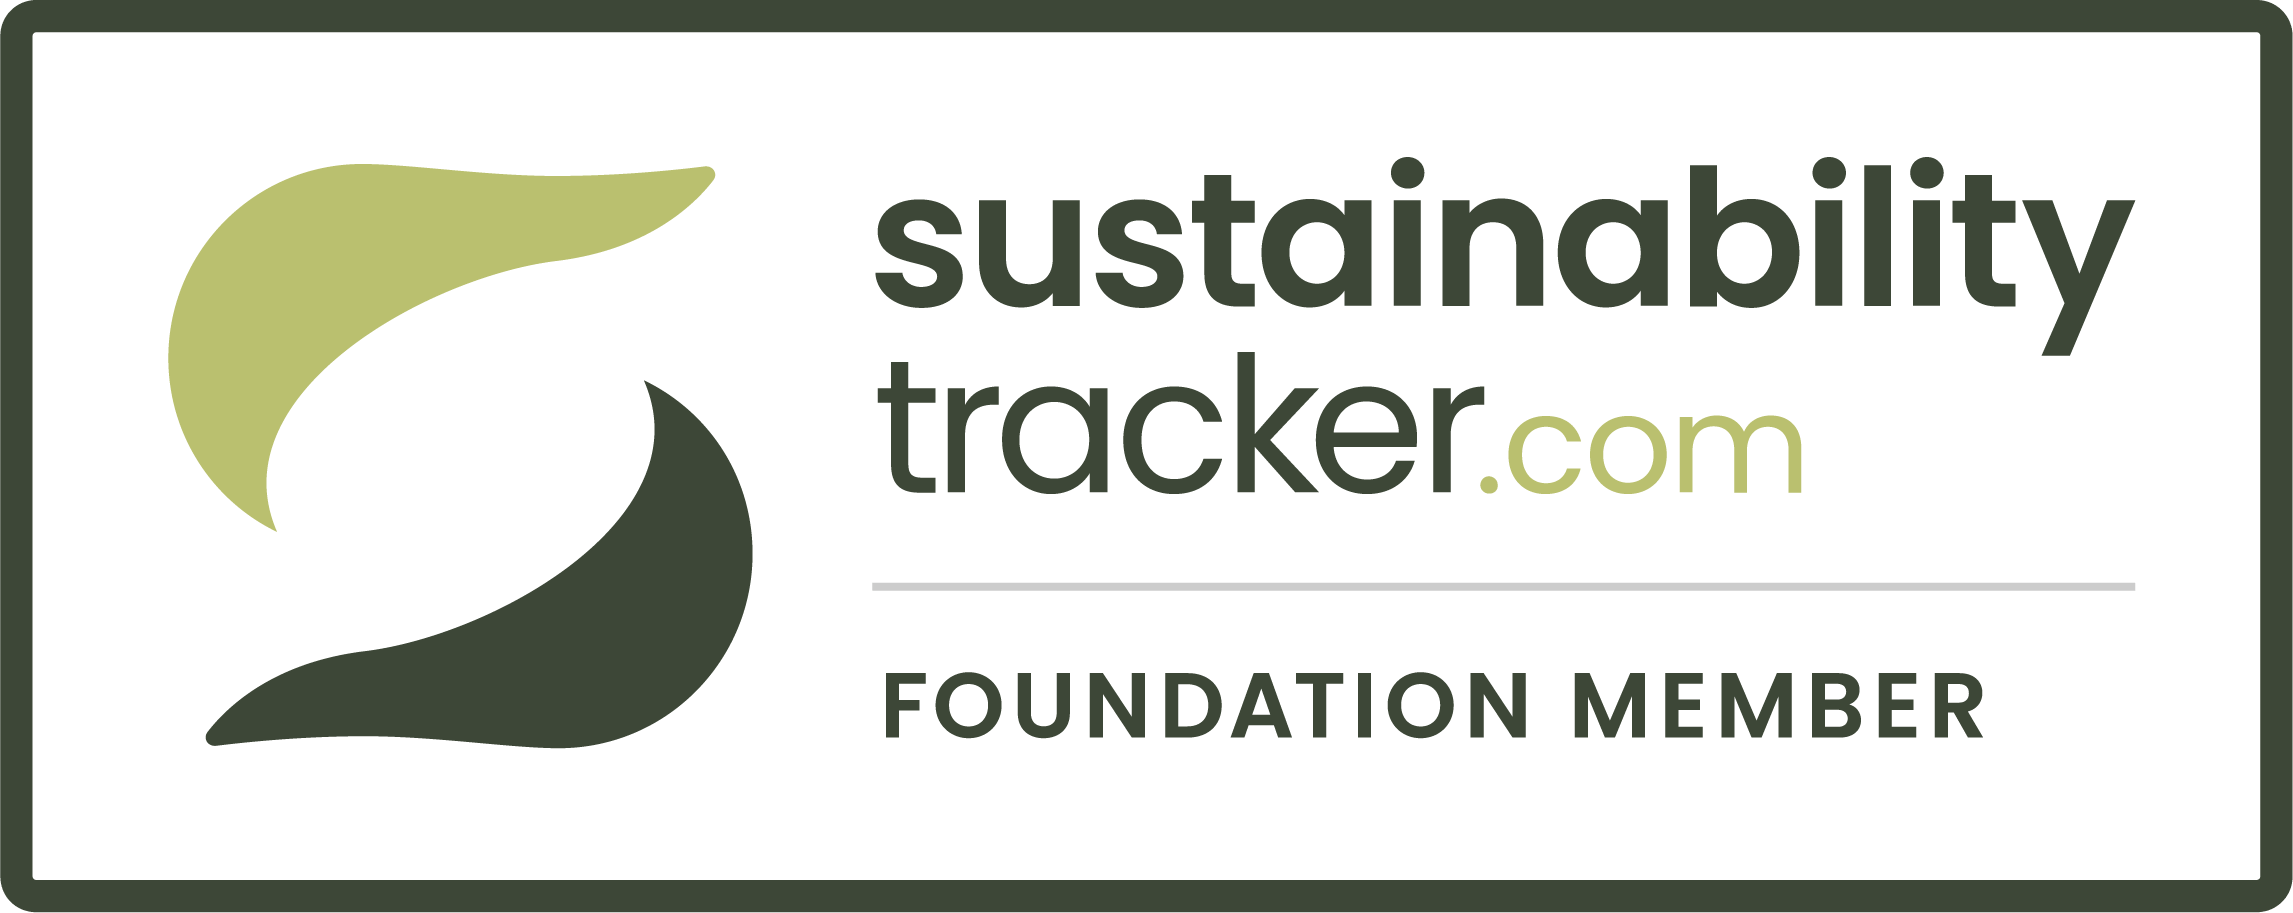 Sustainability tracker.com Foundation Member